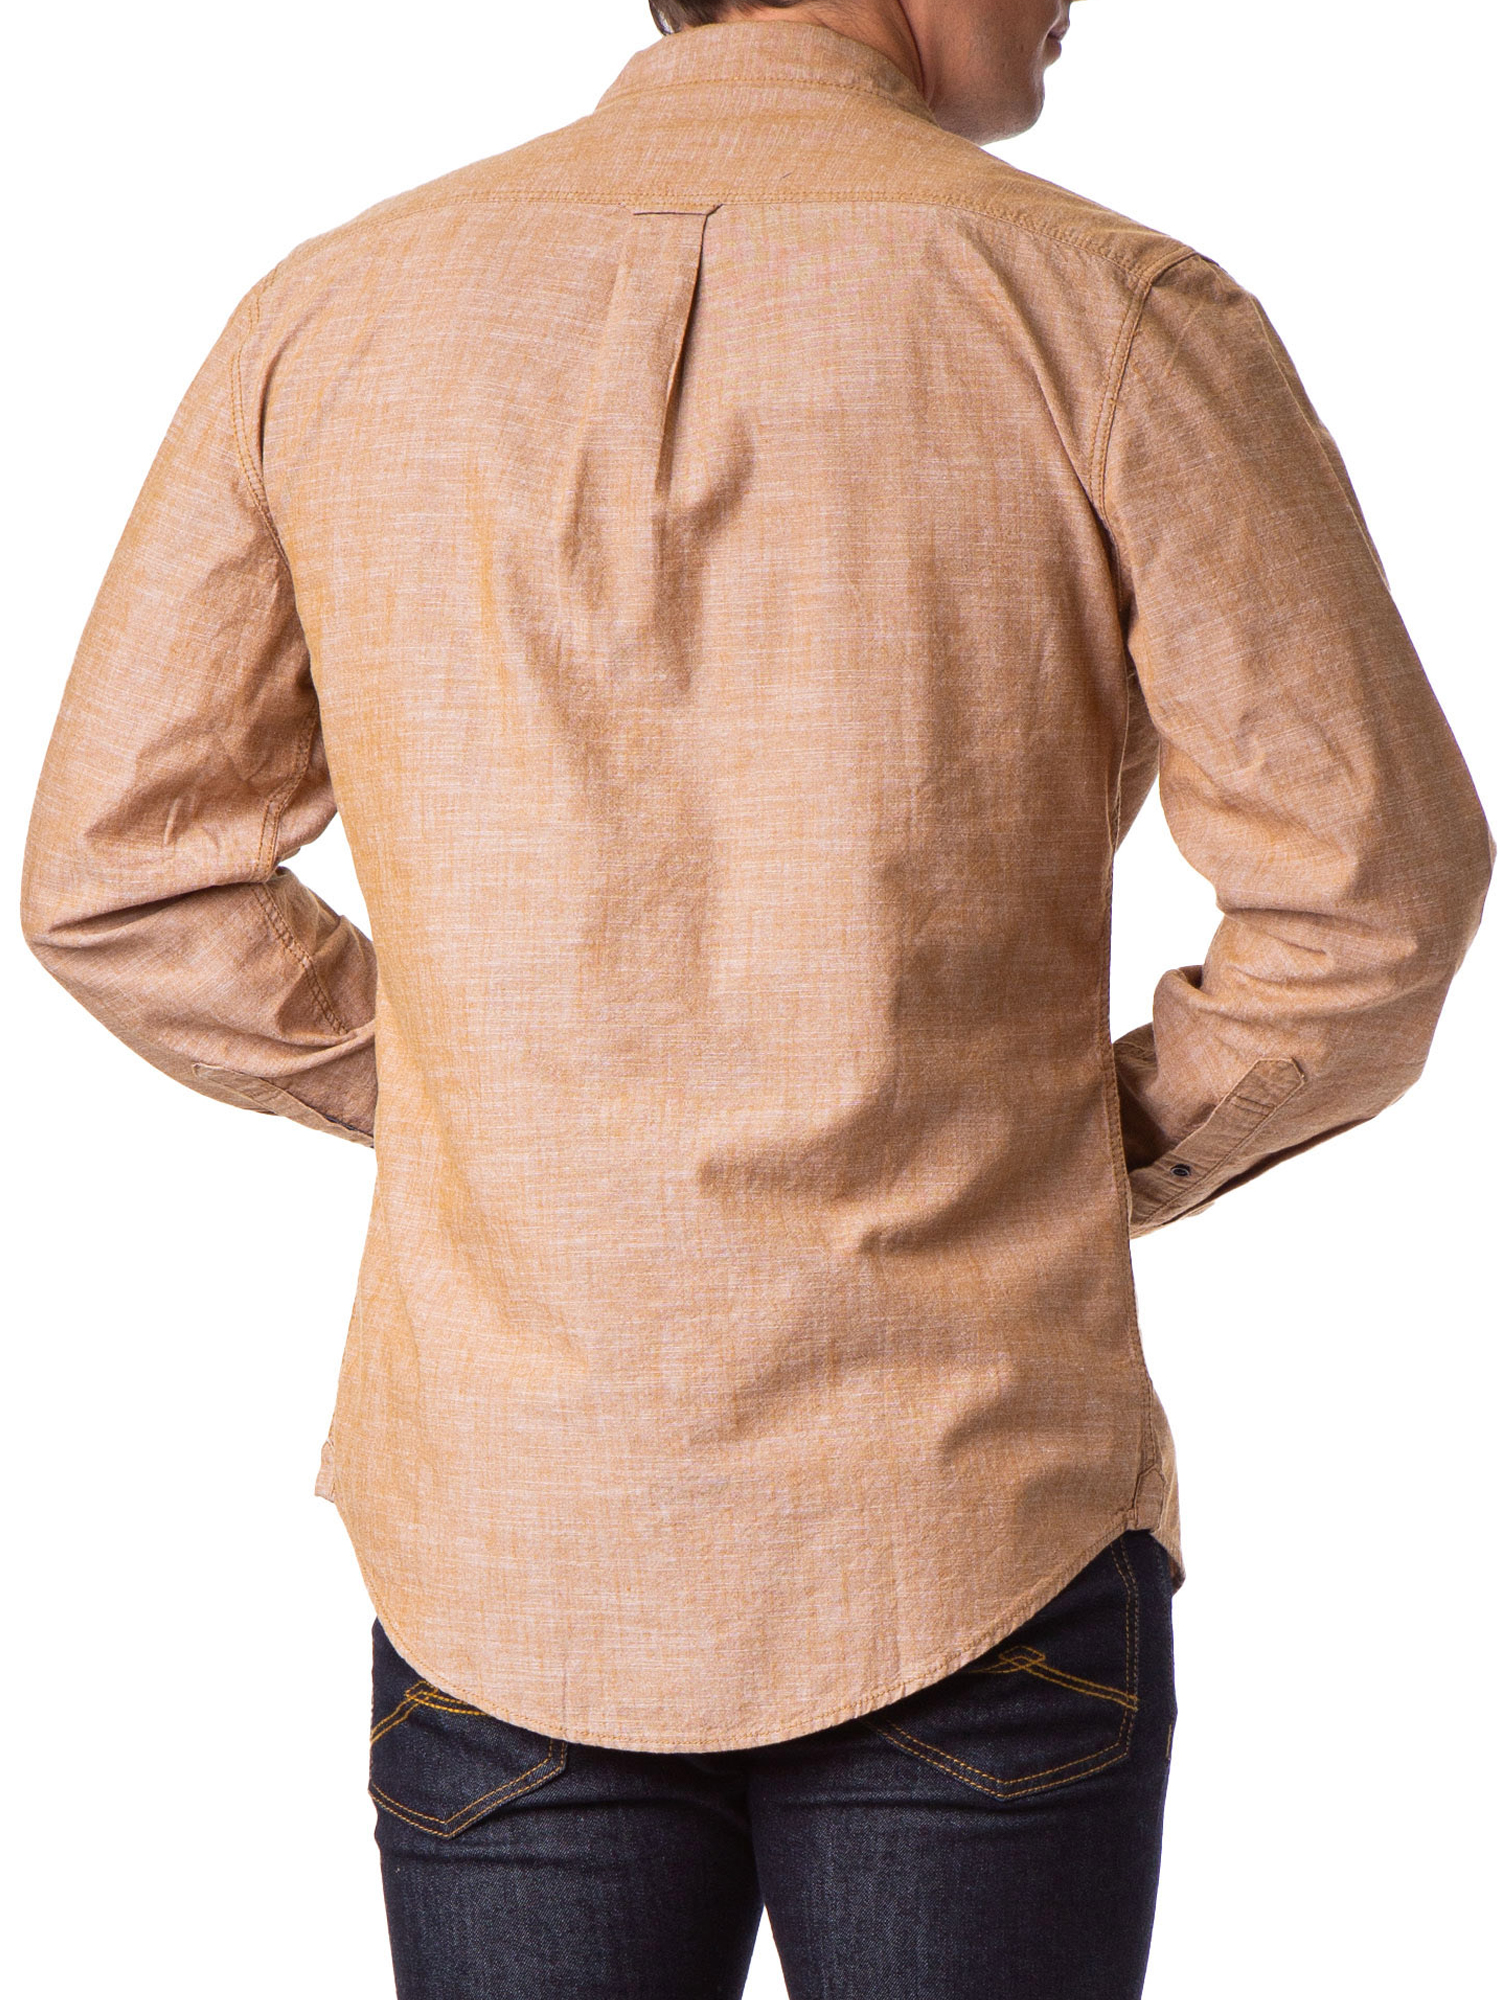 U.S. Polo Assn. Men's 2 Pocket Button Down Shirt - image 2 of 3